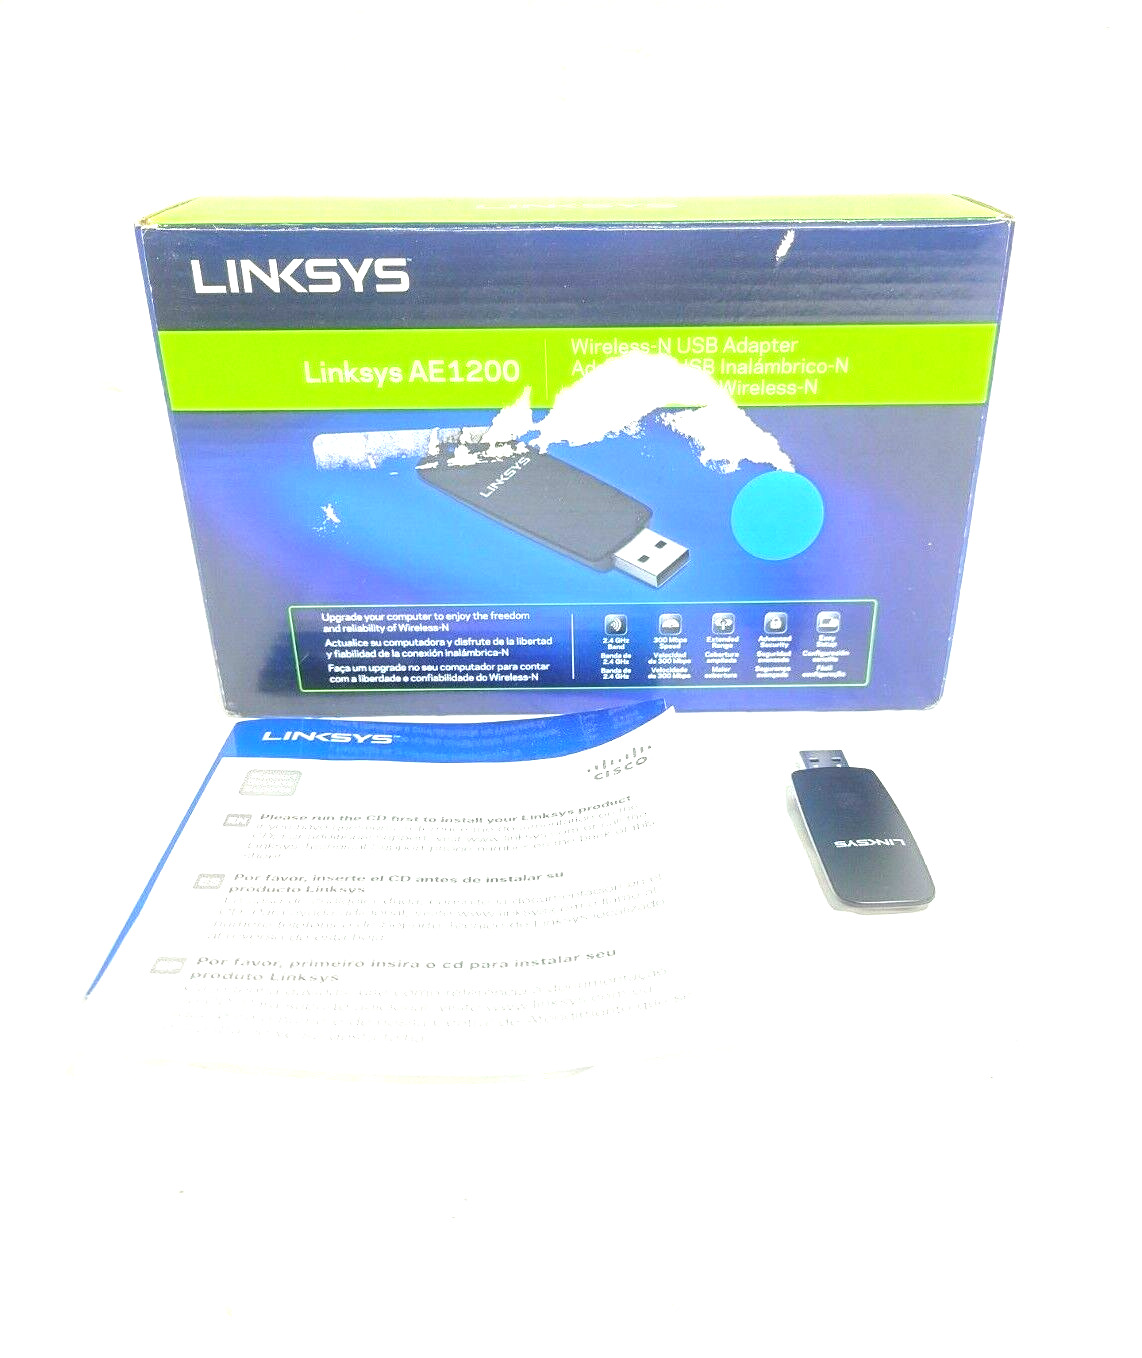  Linksys N300 AE1200 Wireless-N USB Adapter 